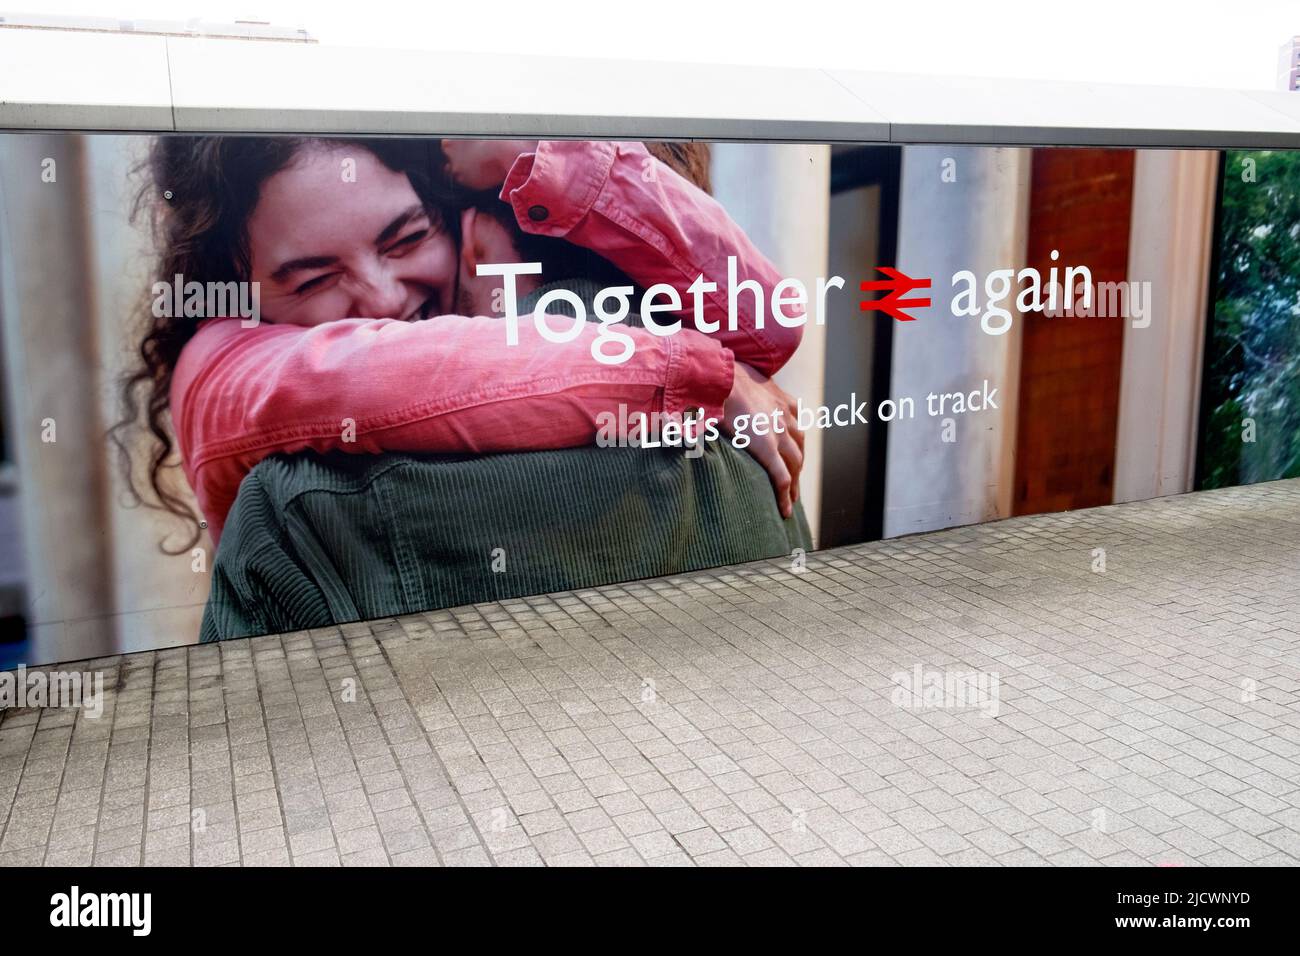 British Rail post covid 19 lockdown advert  2022 'Together again' Let's get back on track' people hugging  Paddington Station London England UK Stock Photo